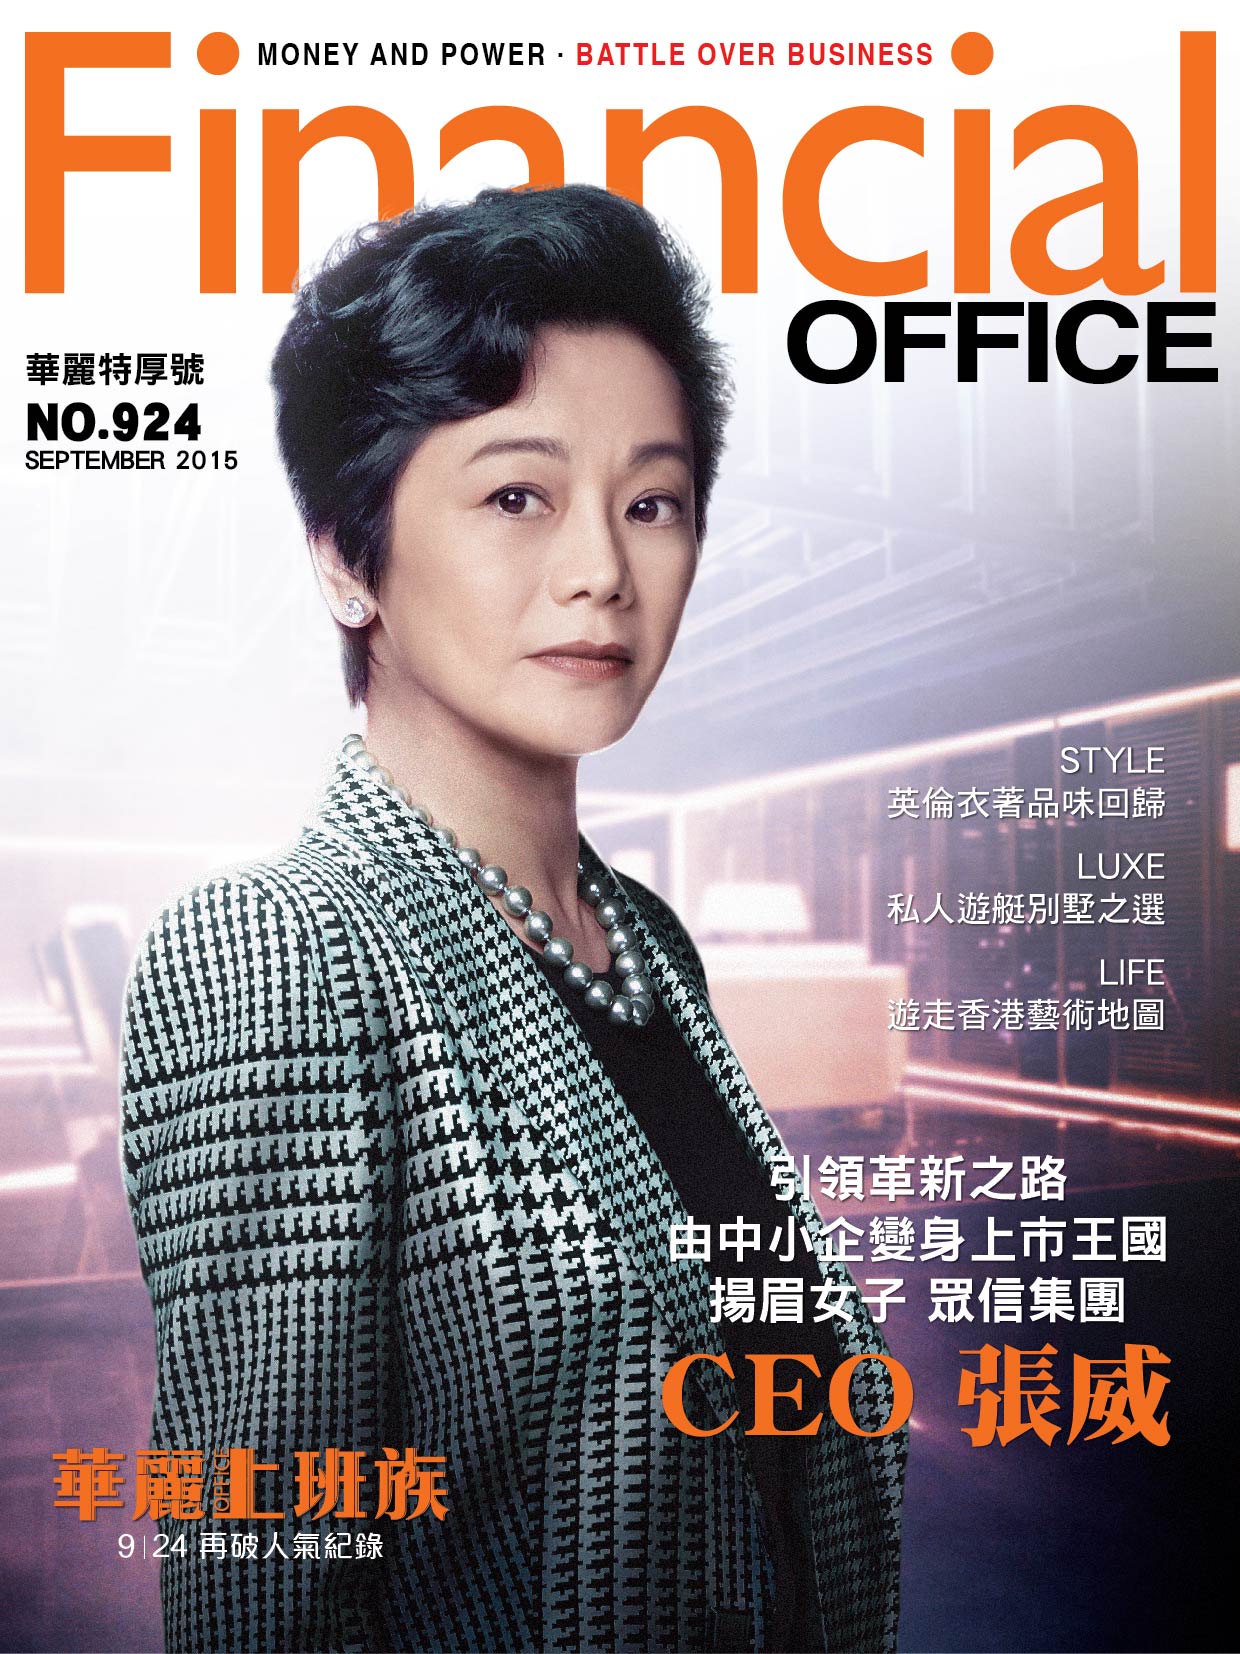 Office_Sylvia_magazine-01